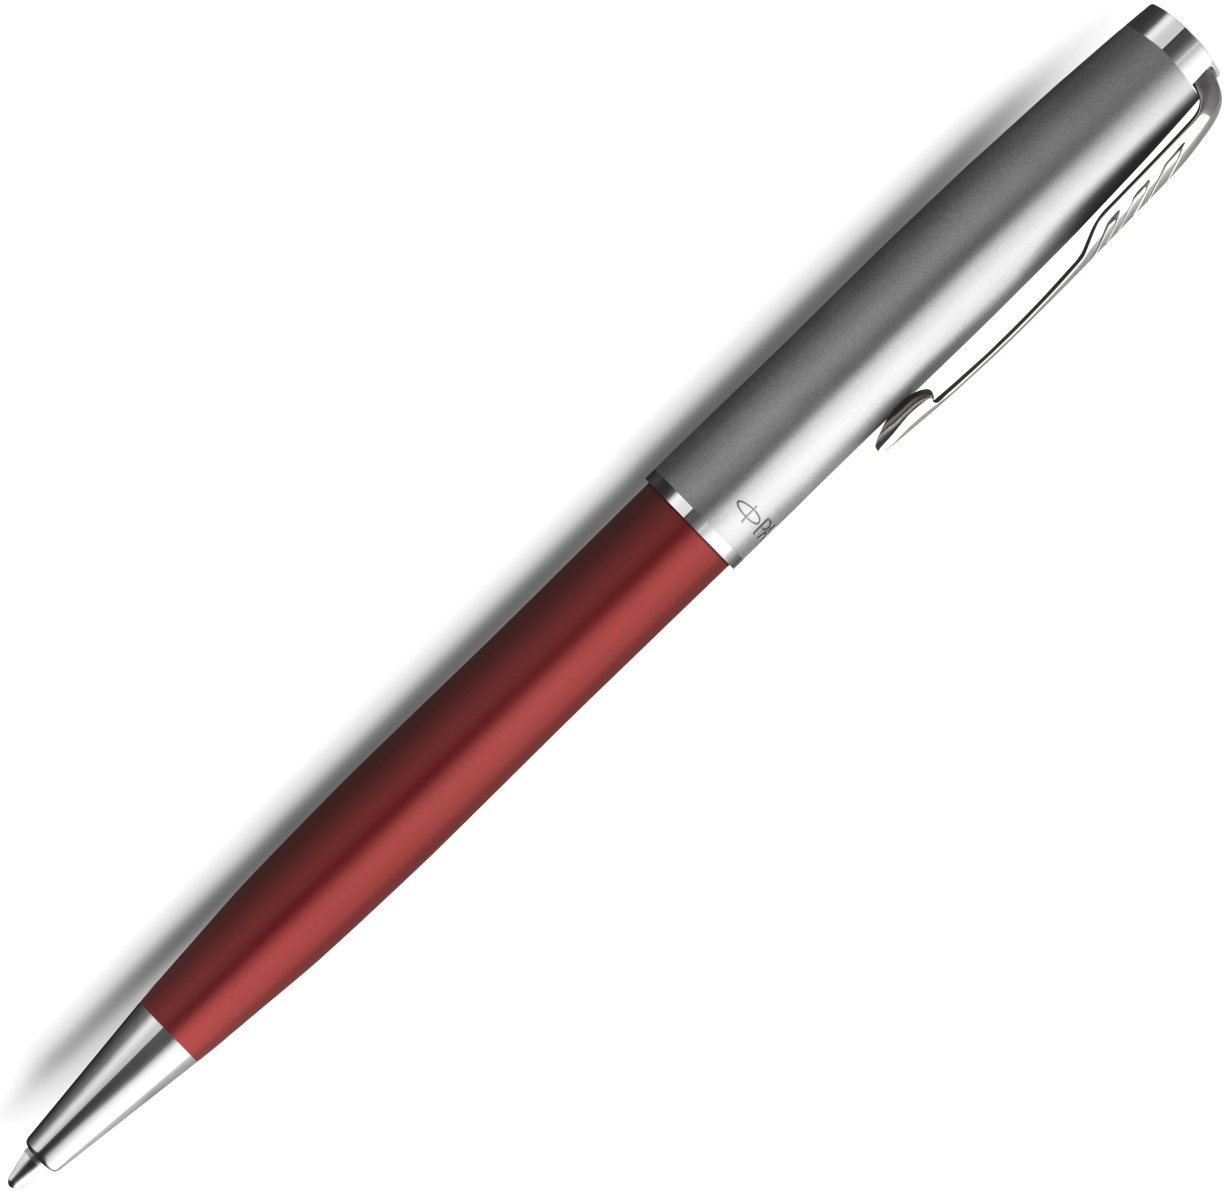  Ручка шариковая Parker Sonnet K546, Red CT, фото 2